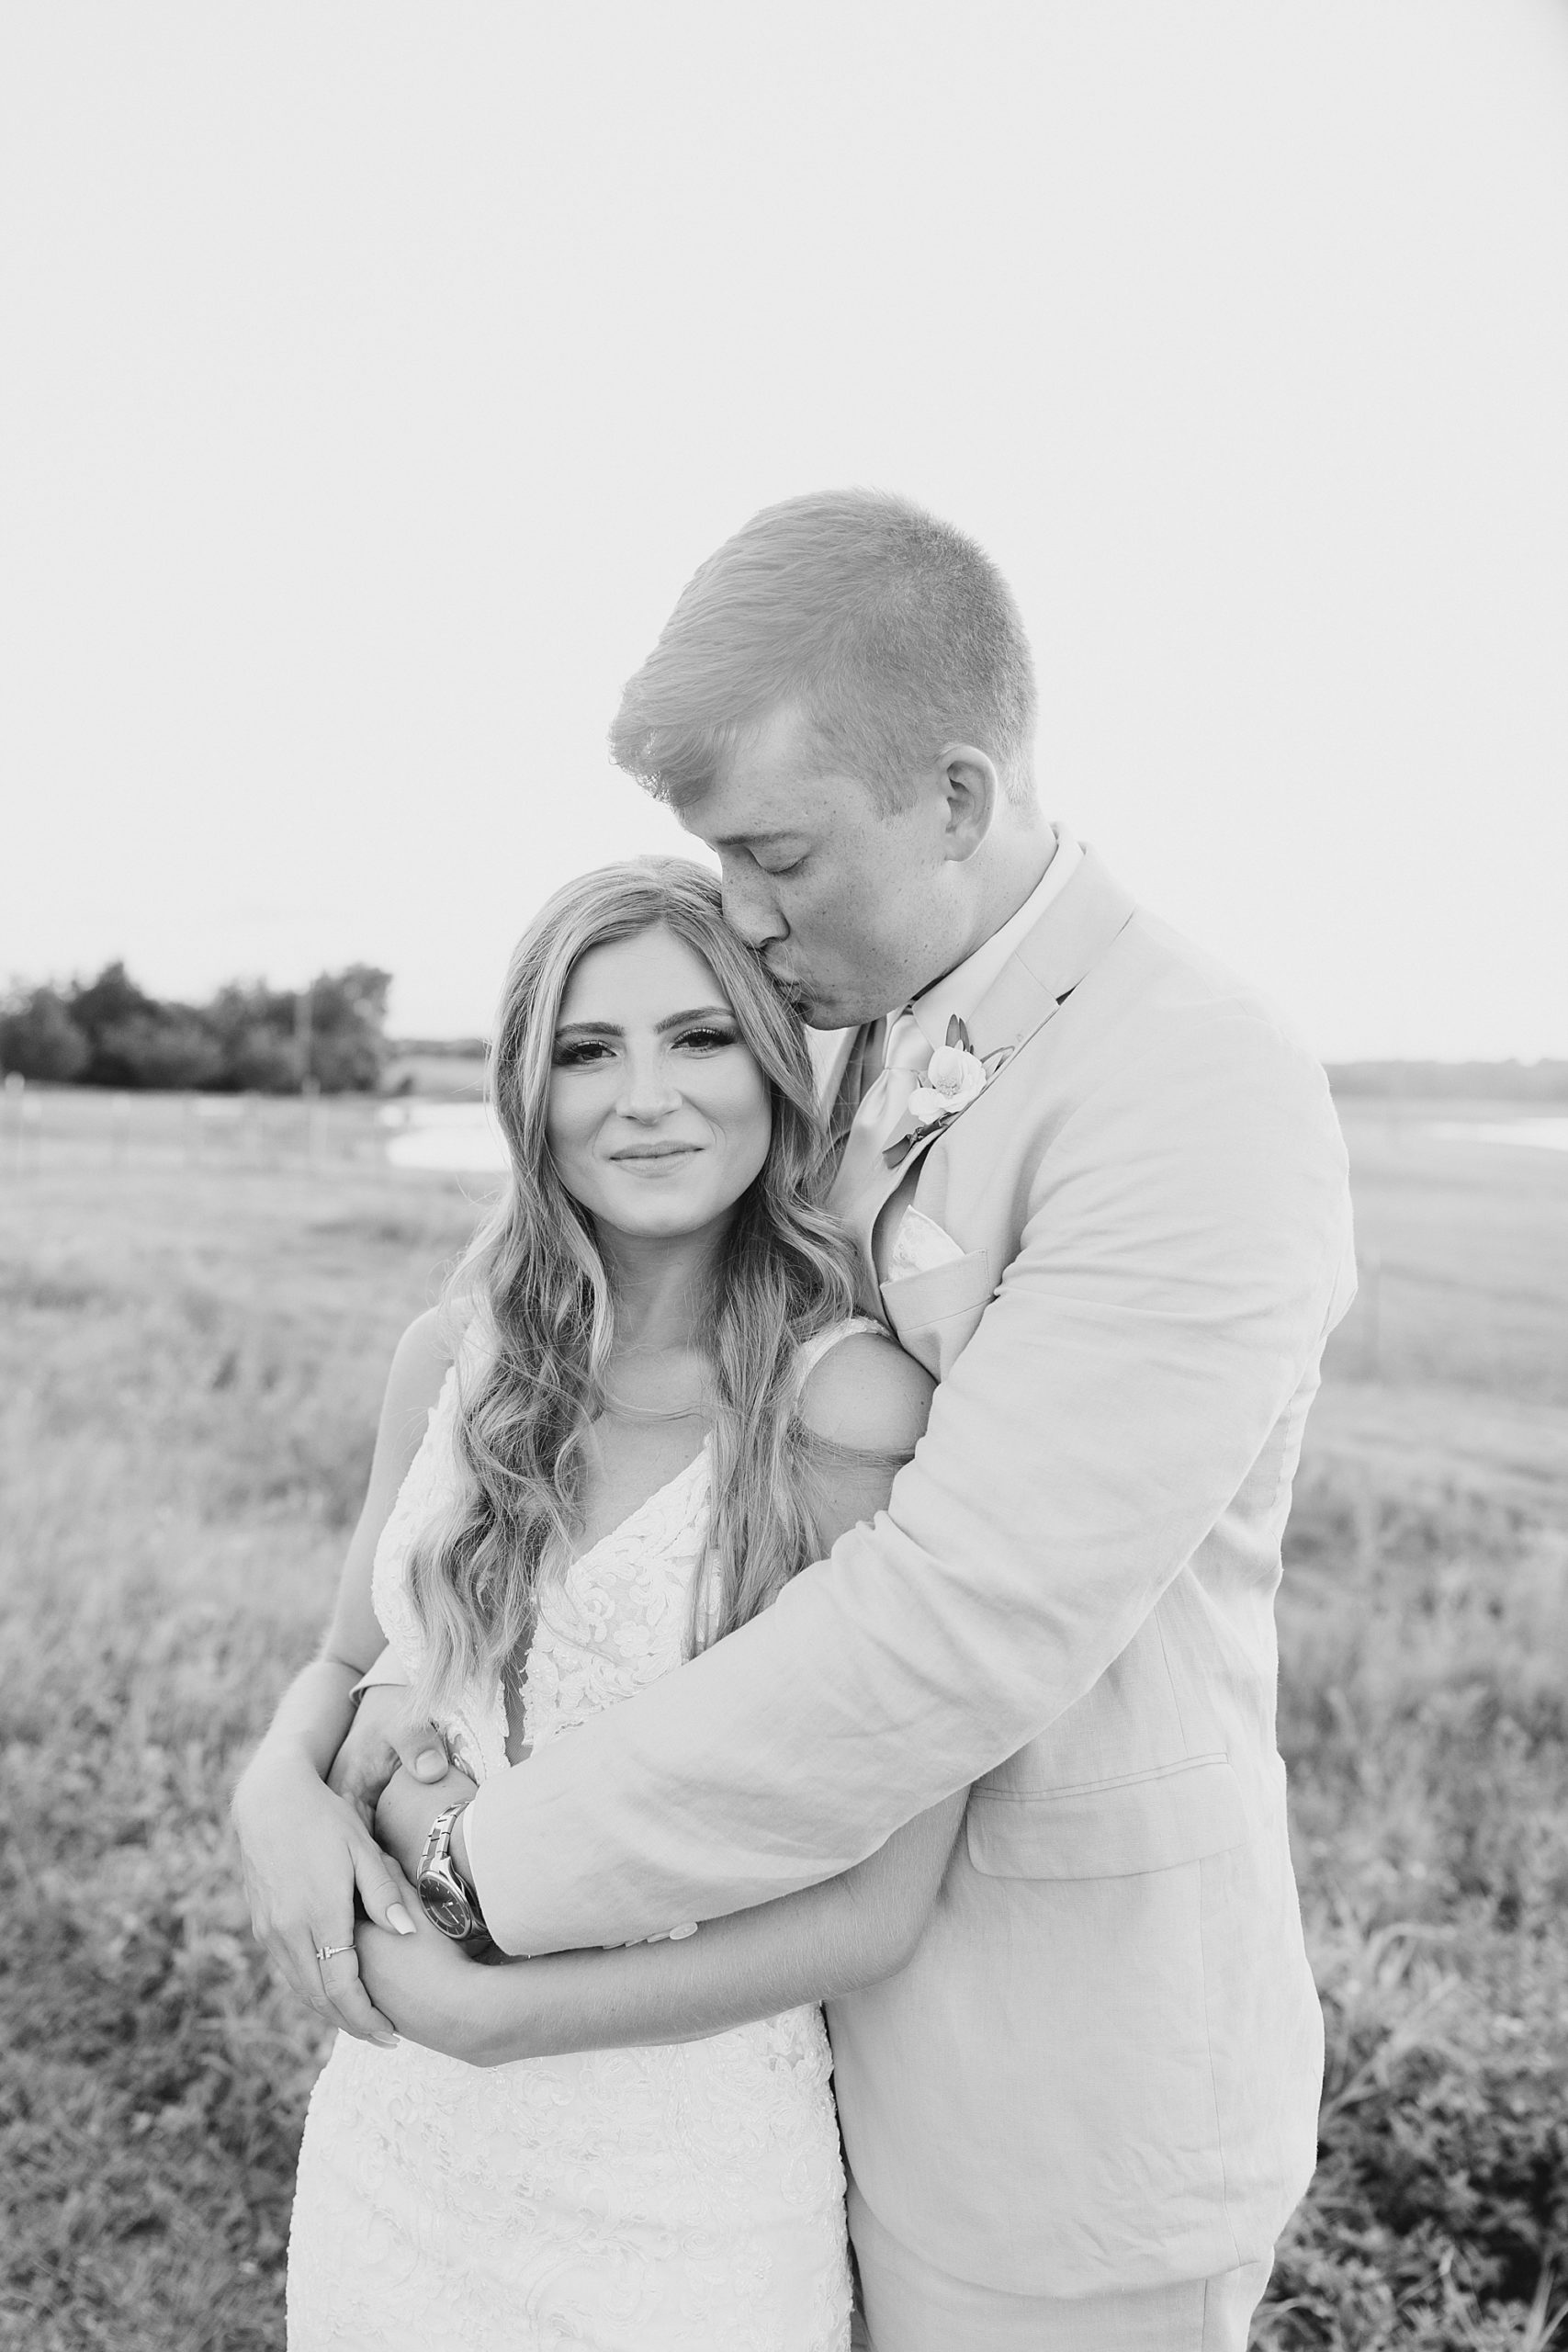 Texas wedding portraits for newlyweds in field